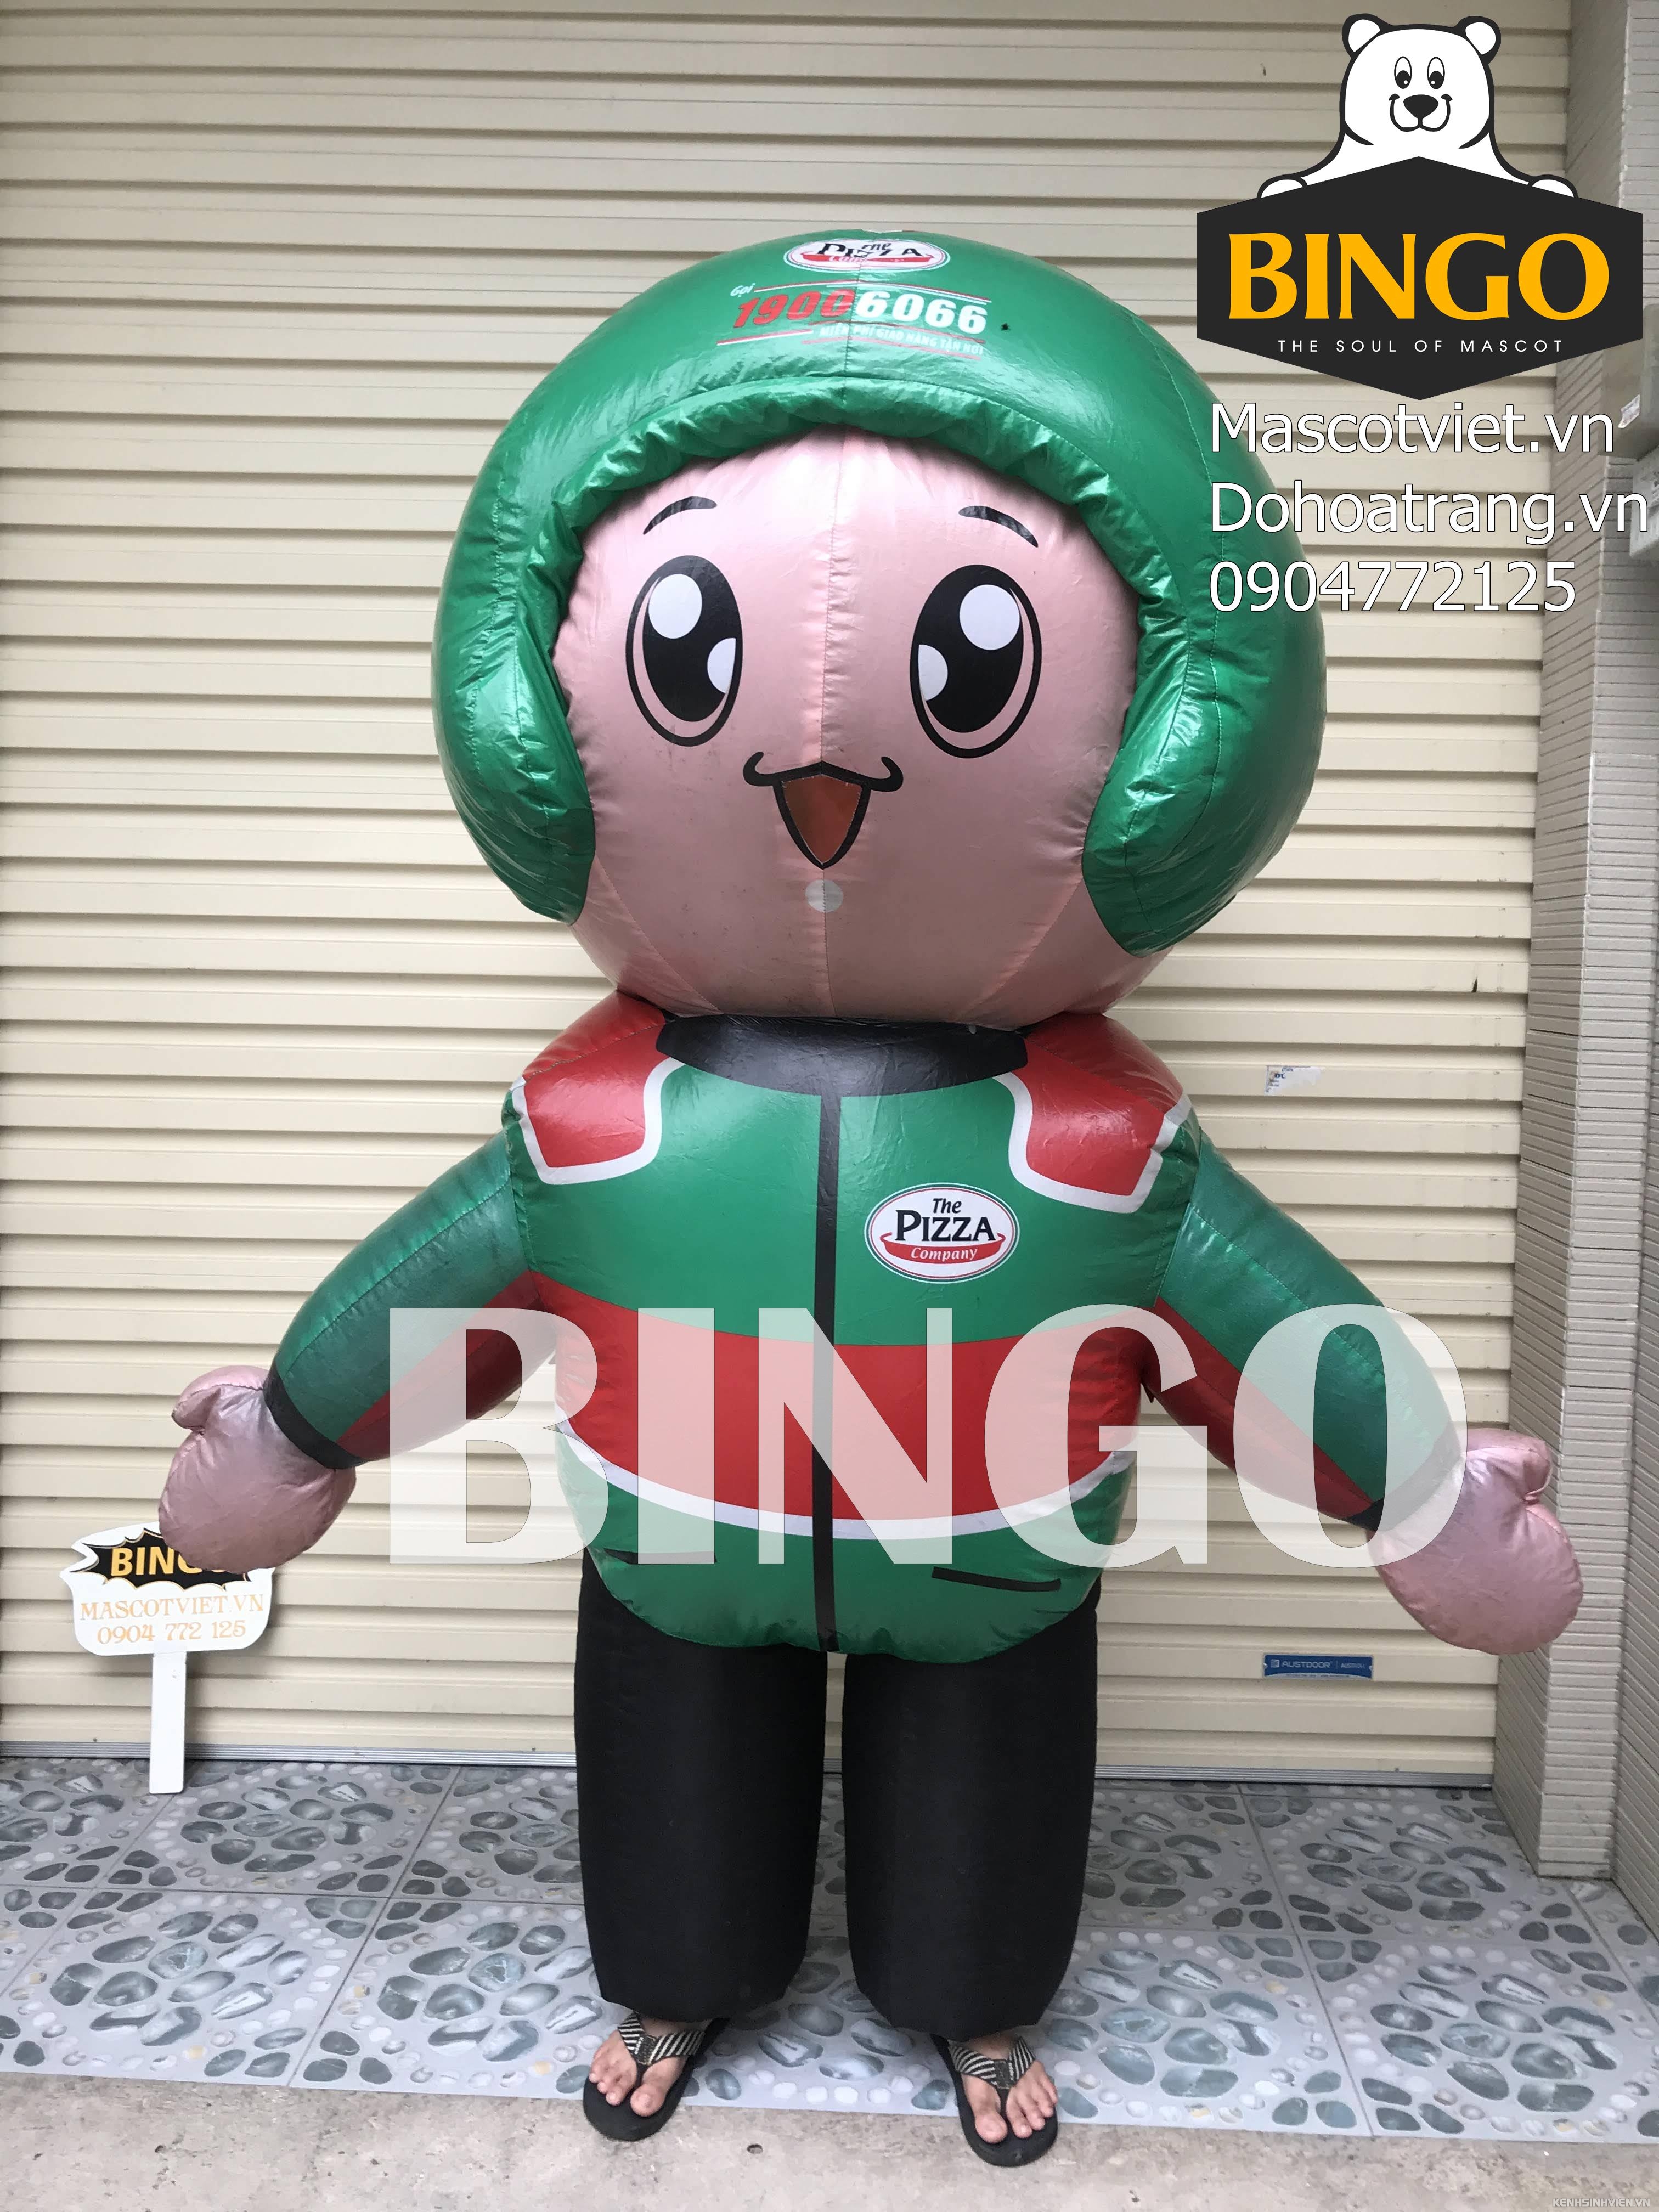 mascot-hoi-banh-pizza-bingo-costumes-0904772125.jpg